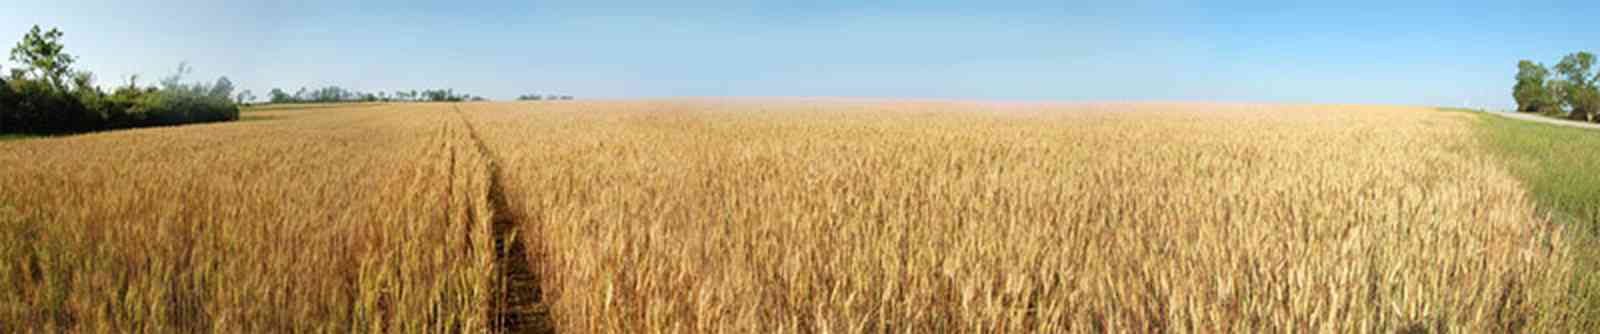 04-27-06+Wenger+Wheat+Field_03+WEB.jpg:  crop rotation, animal feed, field grain, 